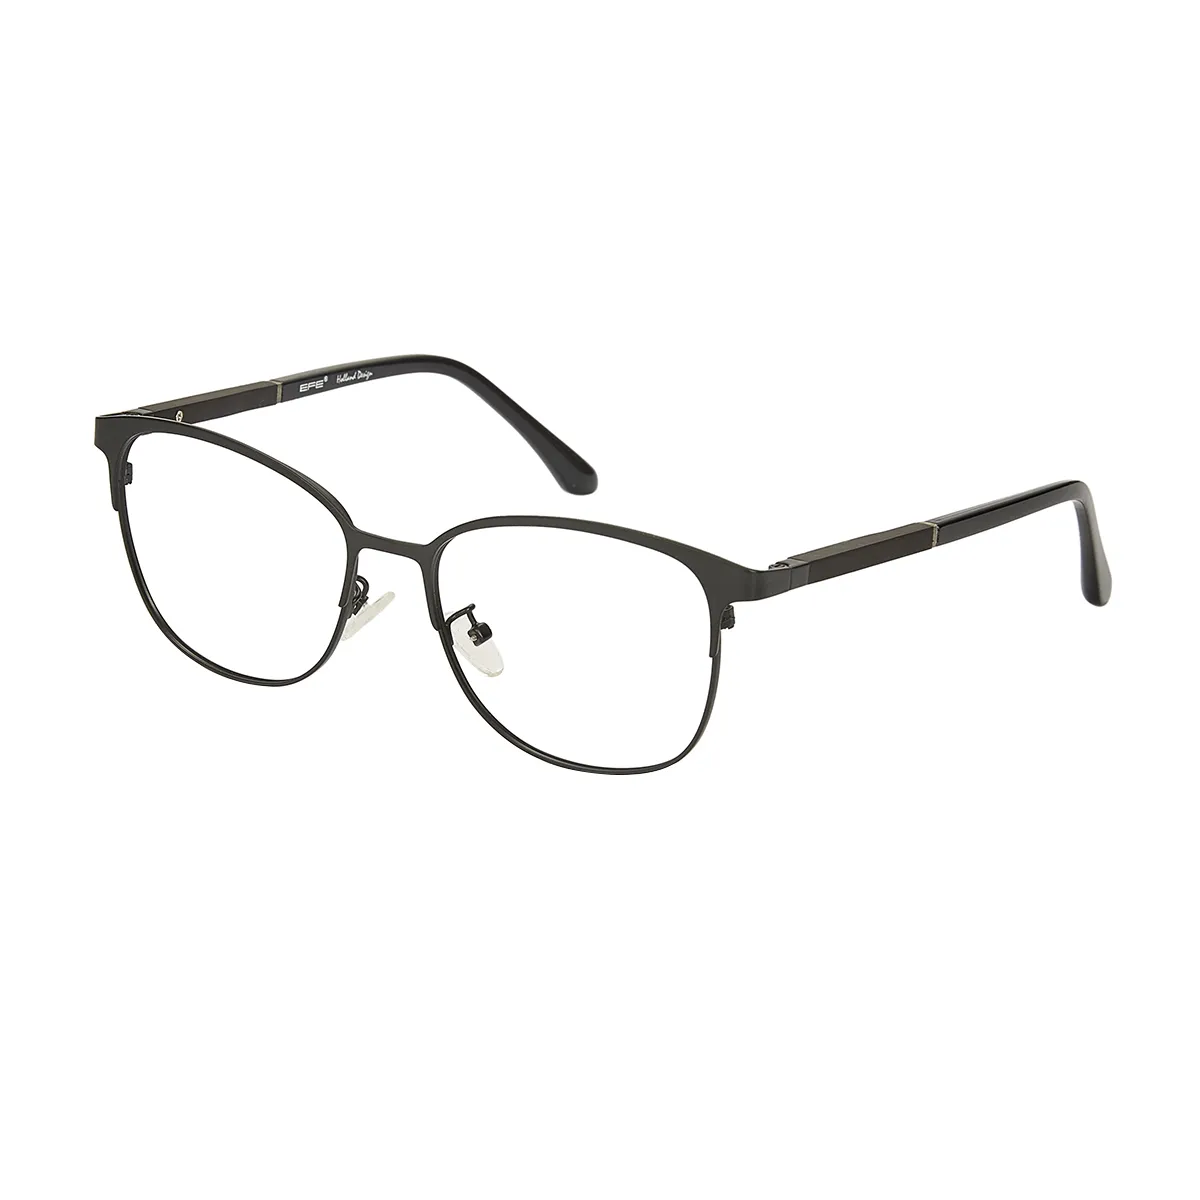 Frieda - Browline Black Glasses for Men - EFE